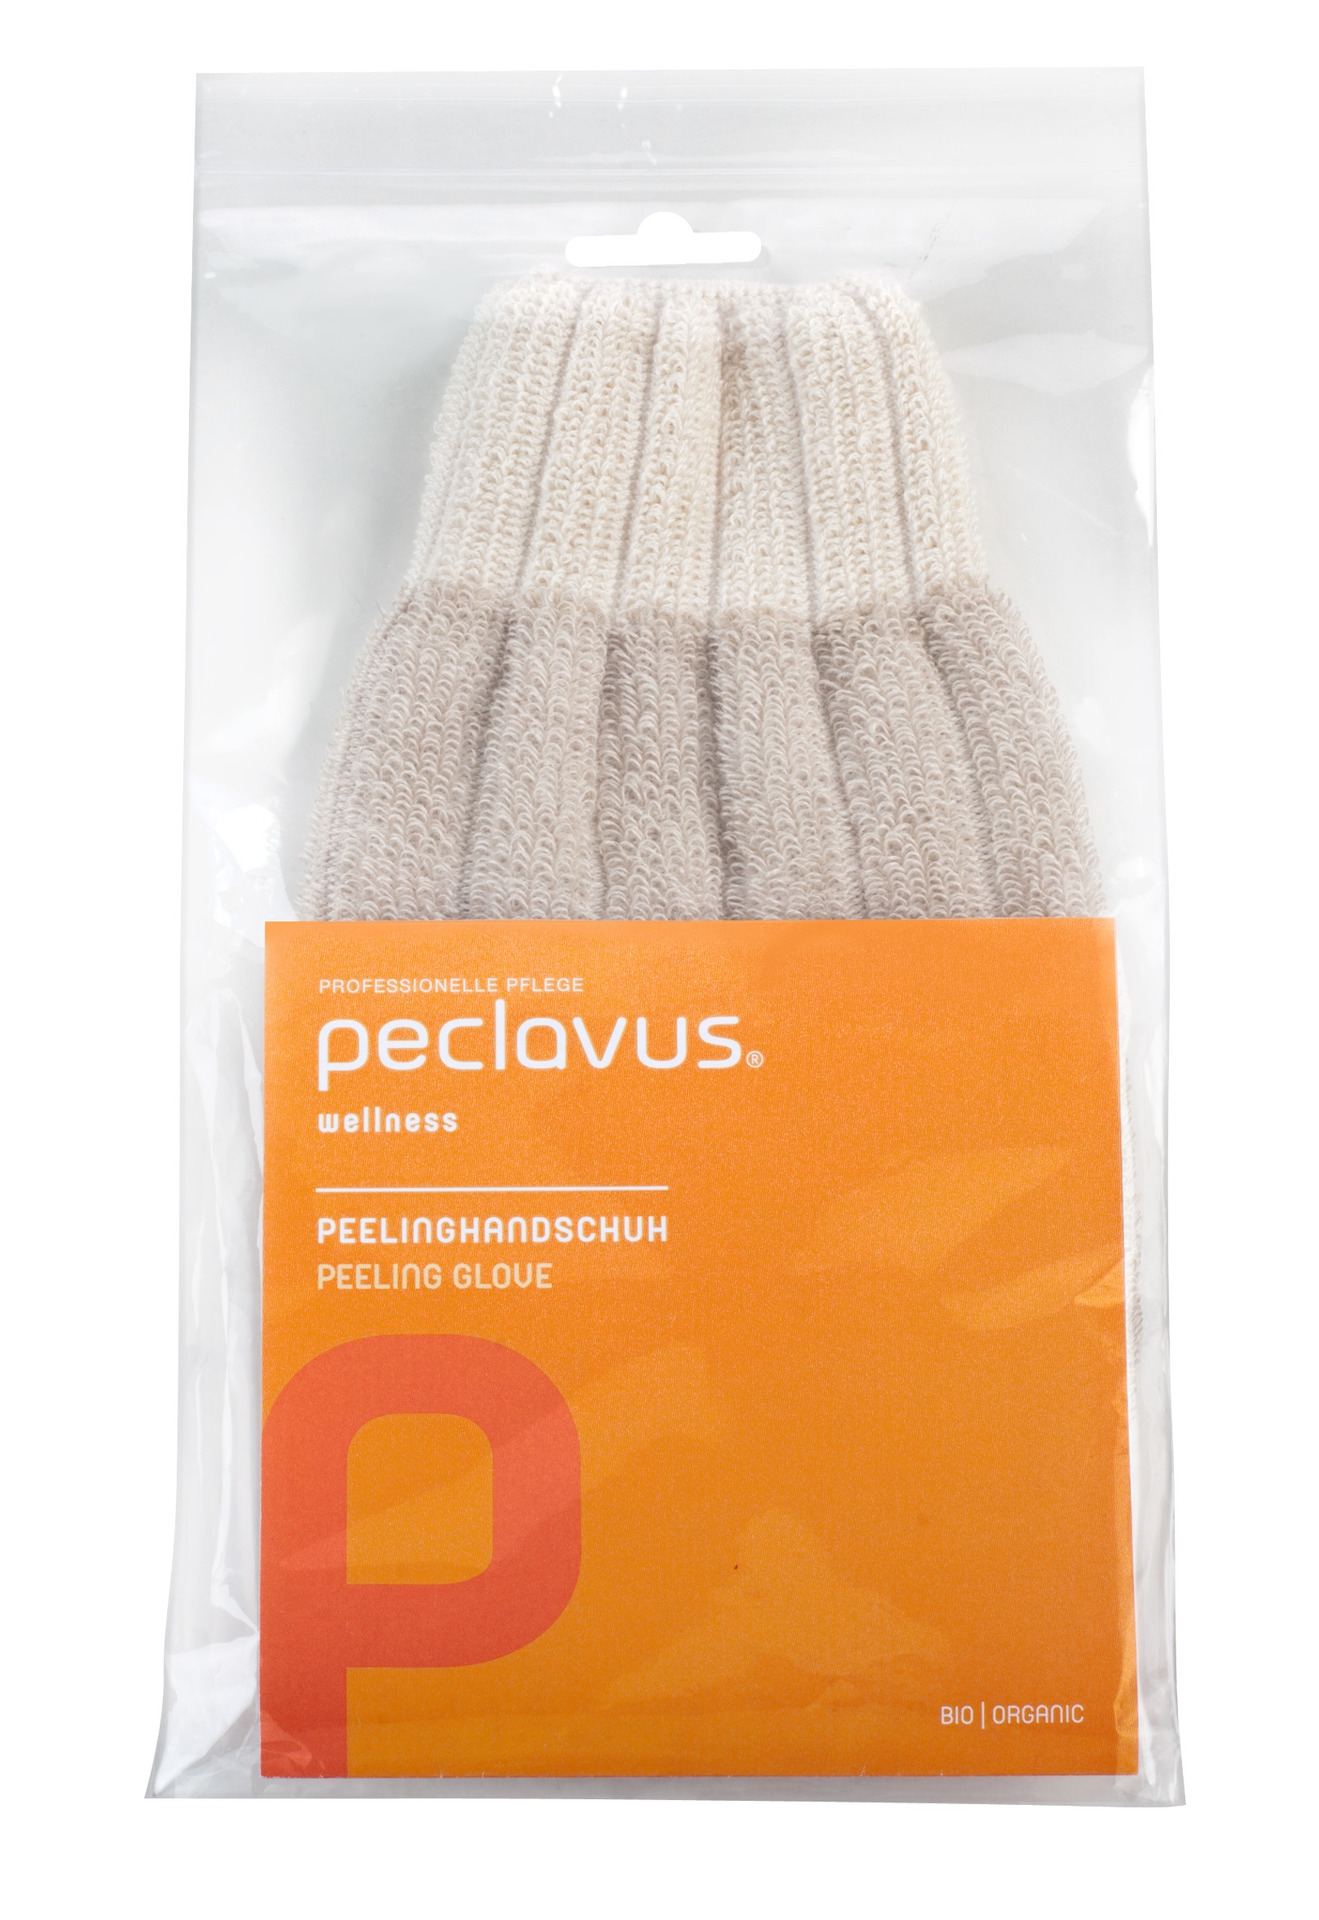 Peclavus Peelinghandschuh (Staffelpreis)